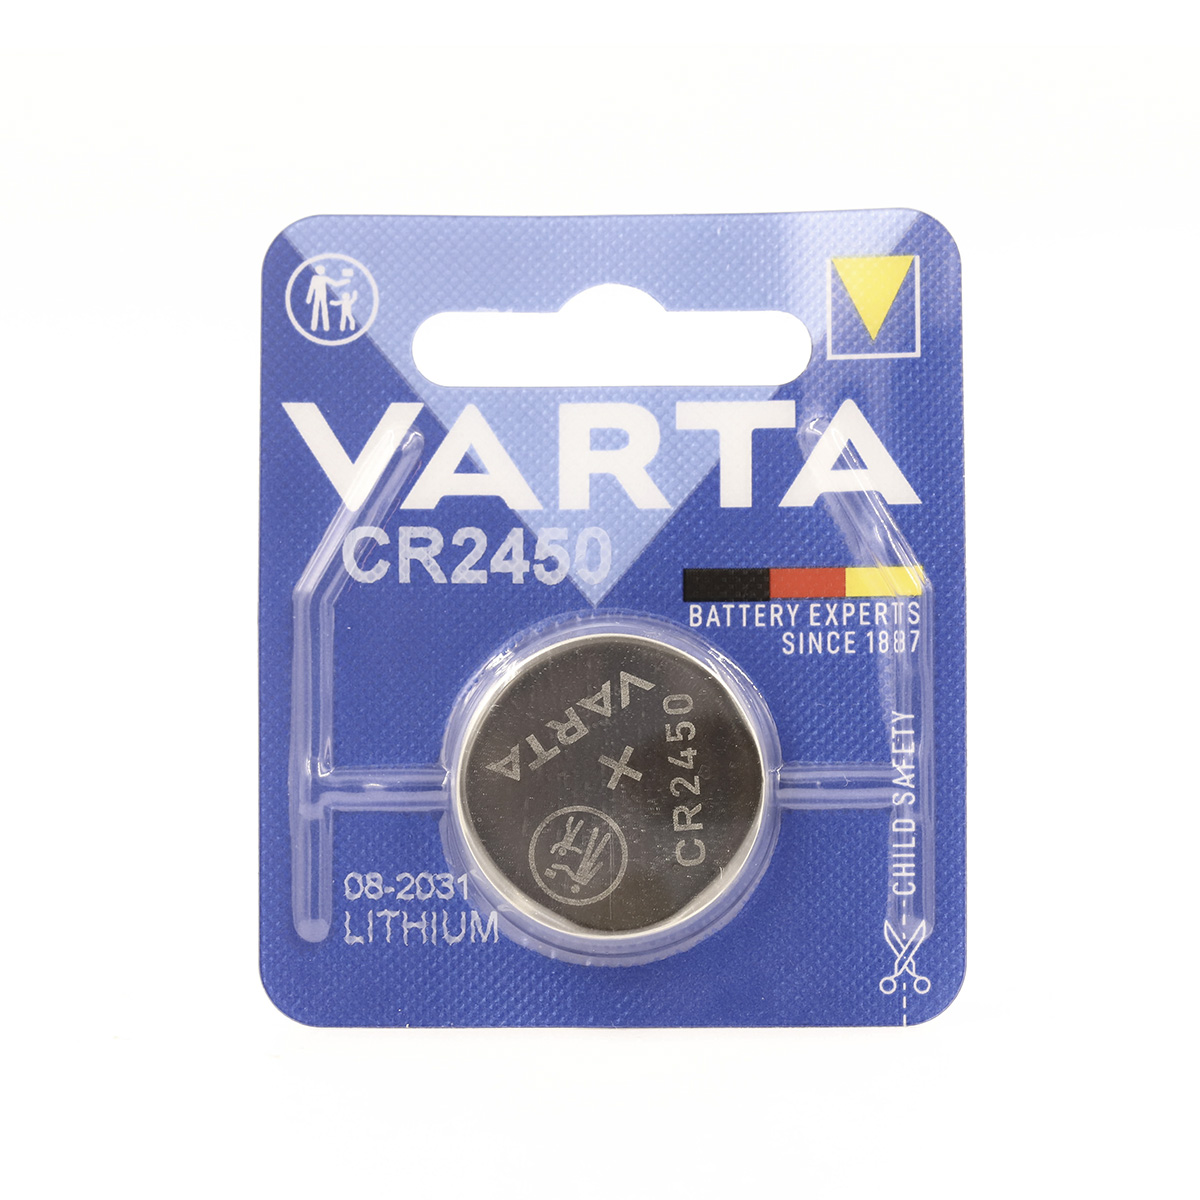 Ein mal Vatra Batterie CR2450 verpackt